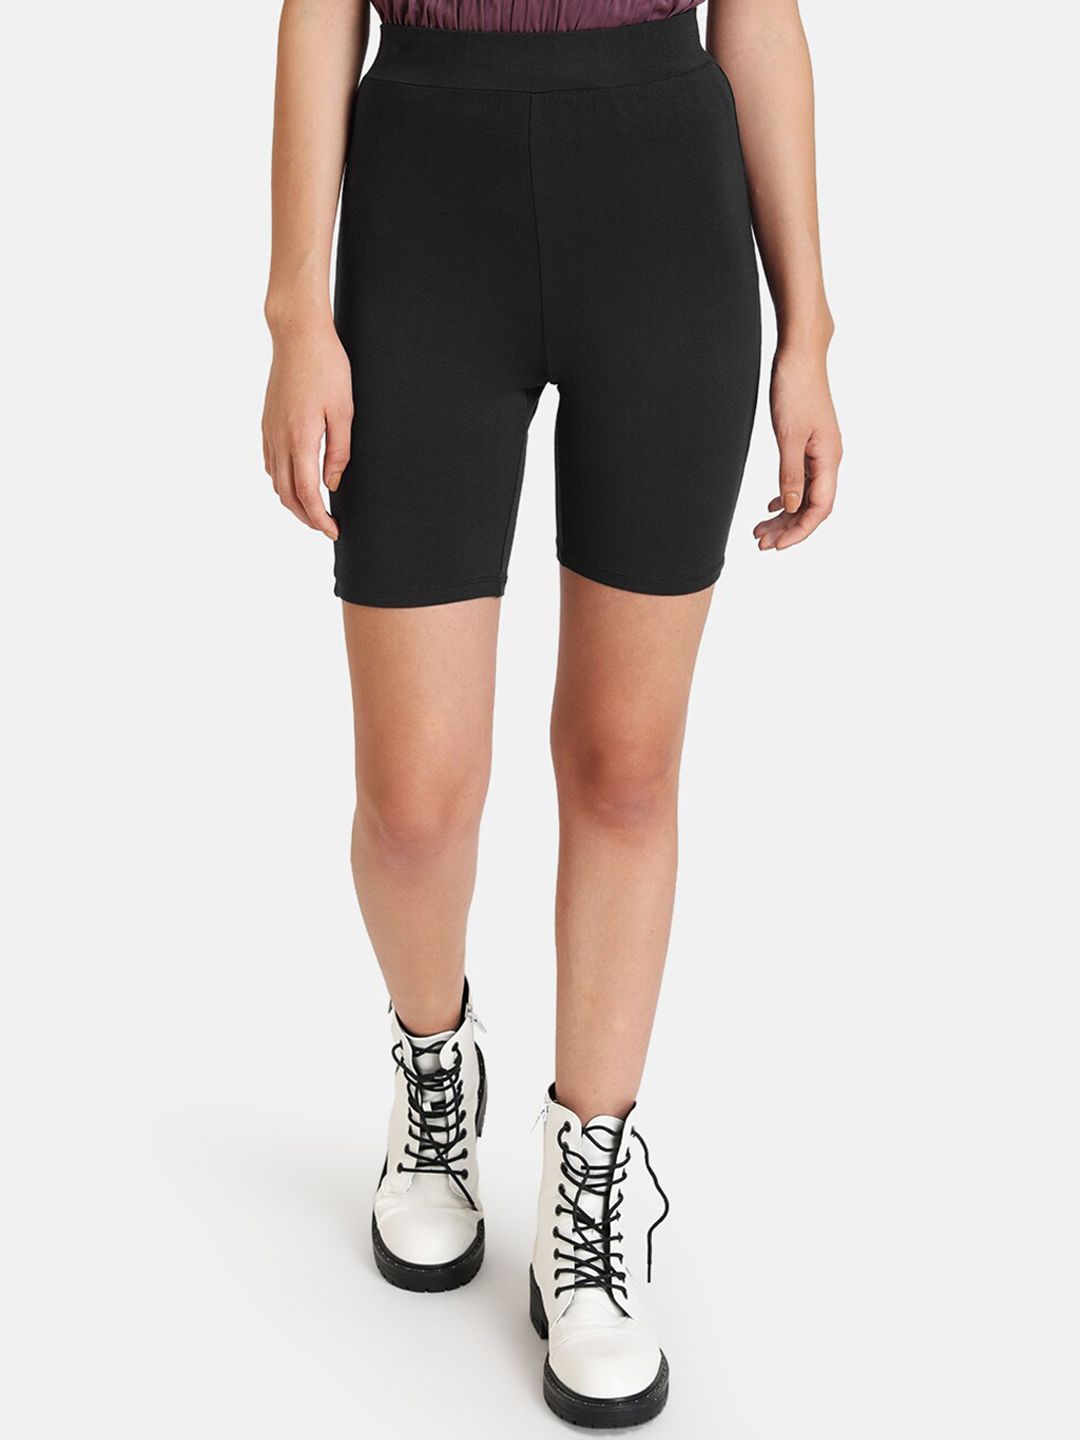 Kazo Women Black Solid Regular Fit Biker Shorts Price in India